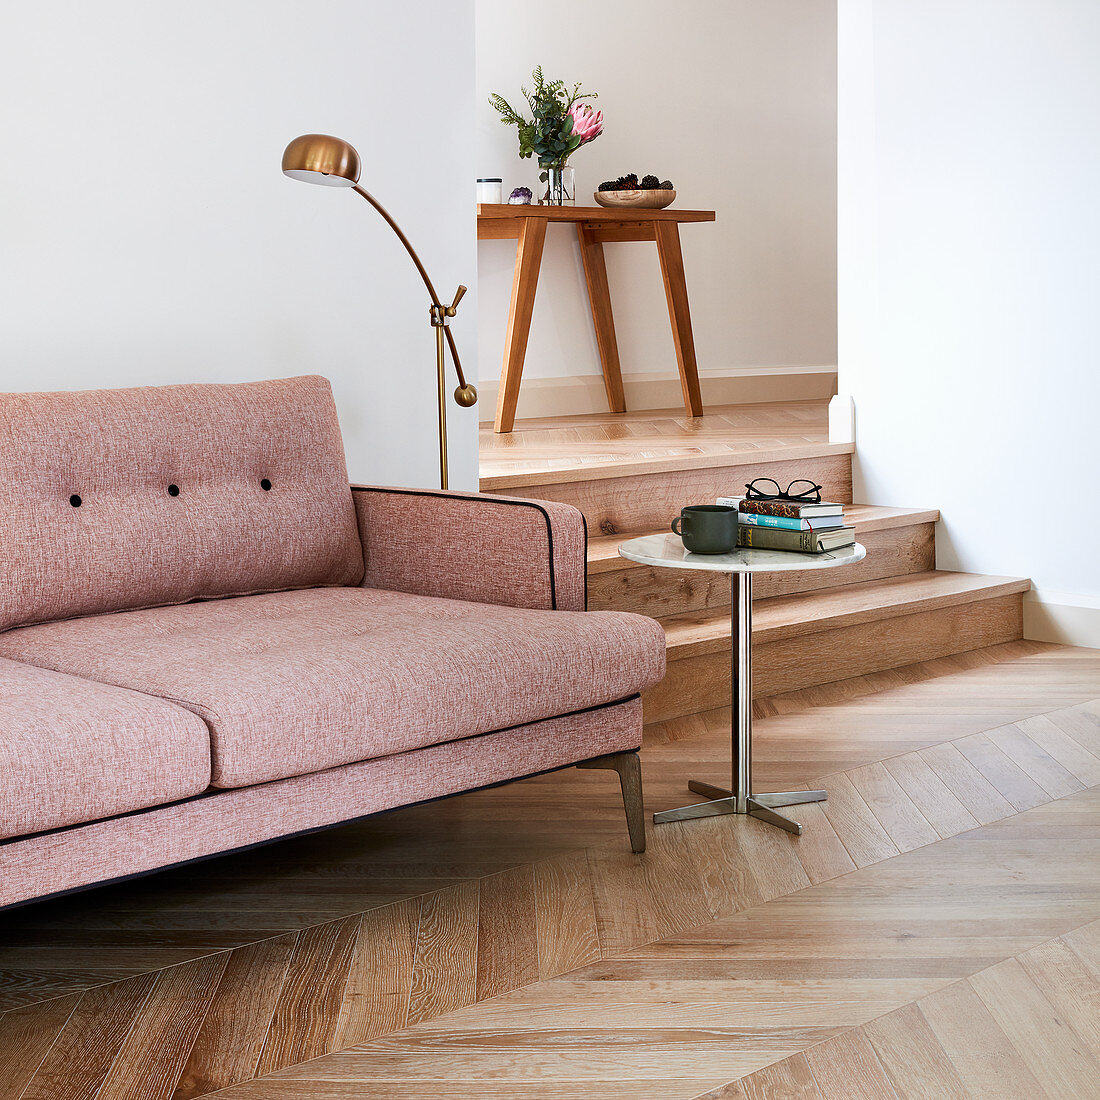 Dusky pink sofa on herringbone parquet floor next to steps leading to hallway